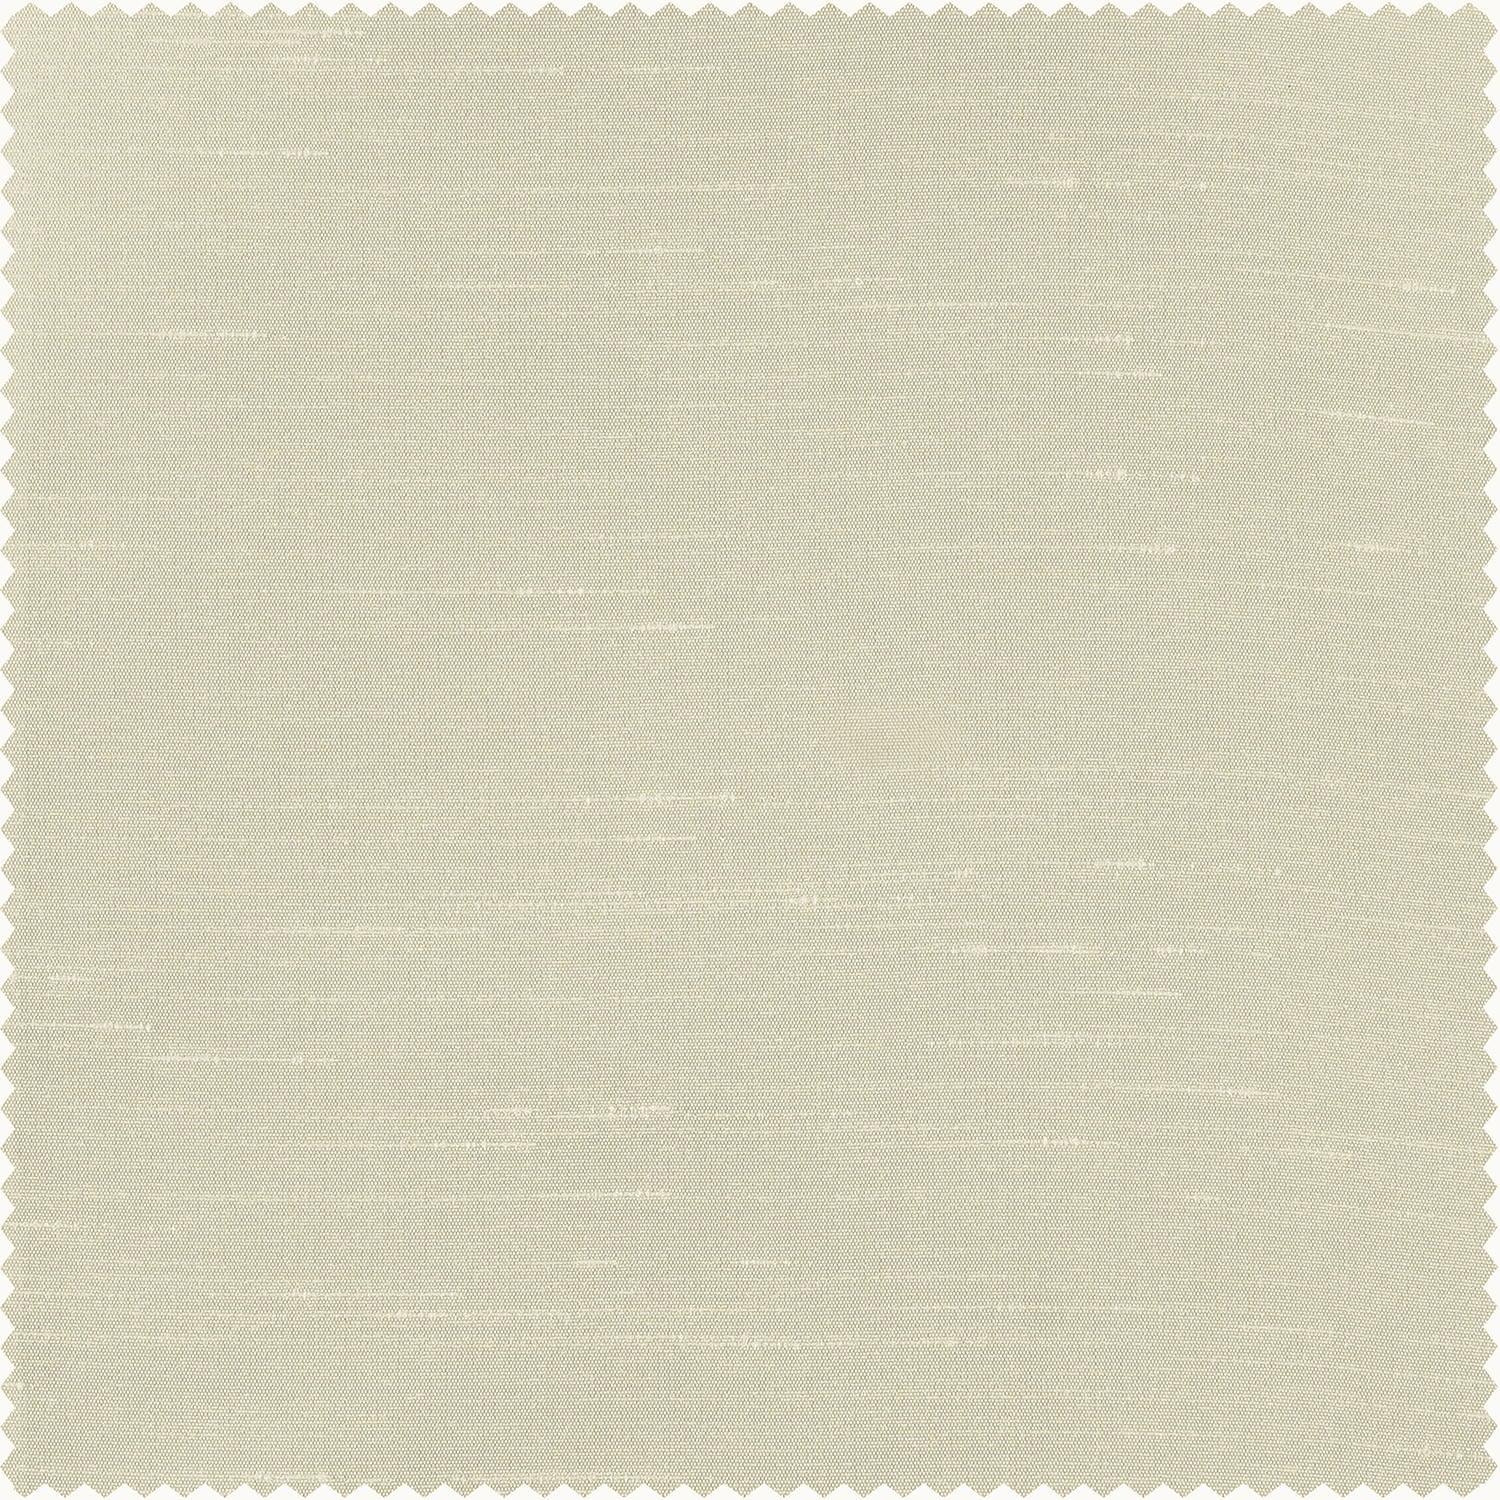 Off White Vintage Textured Faux Dupioni Silk Blackout Curtain